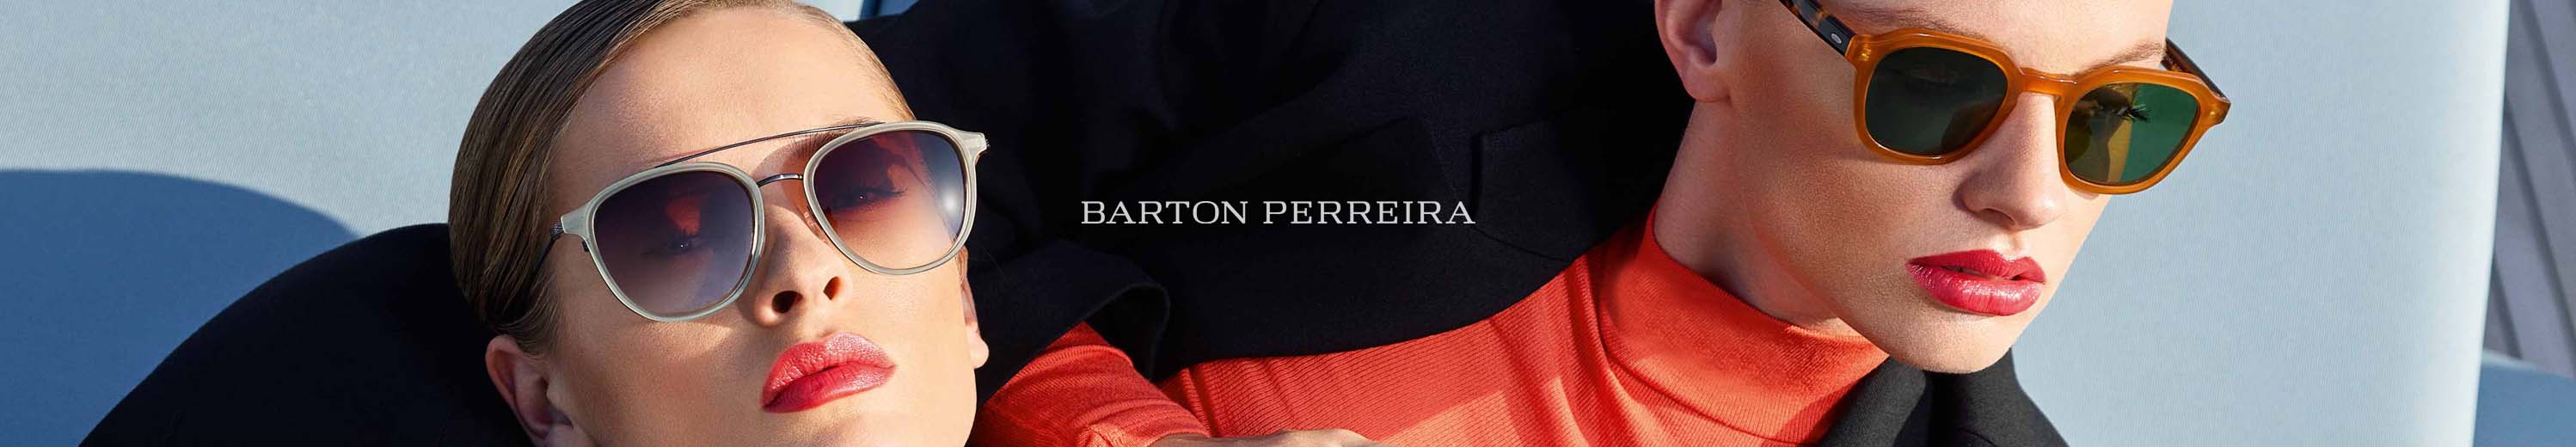 Barton Perreira Glasses and Eyewear